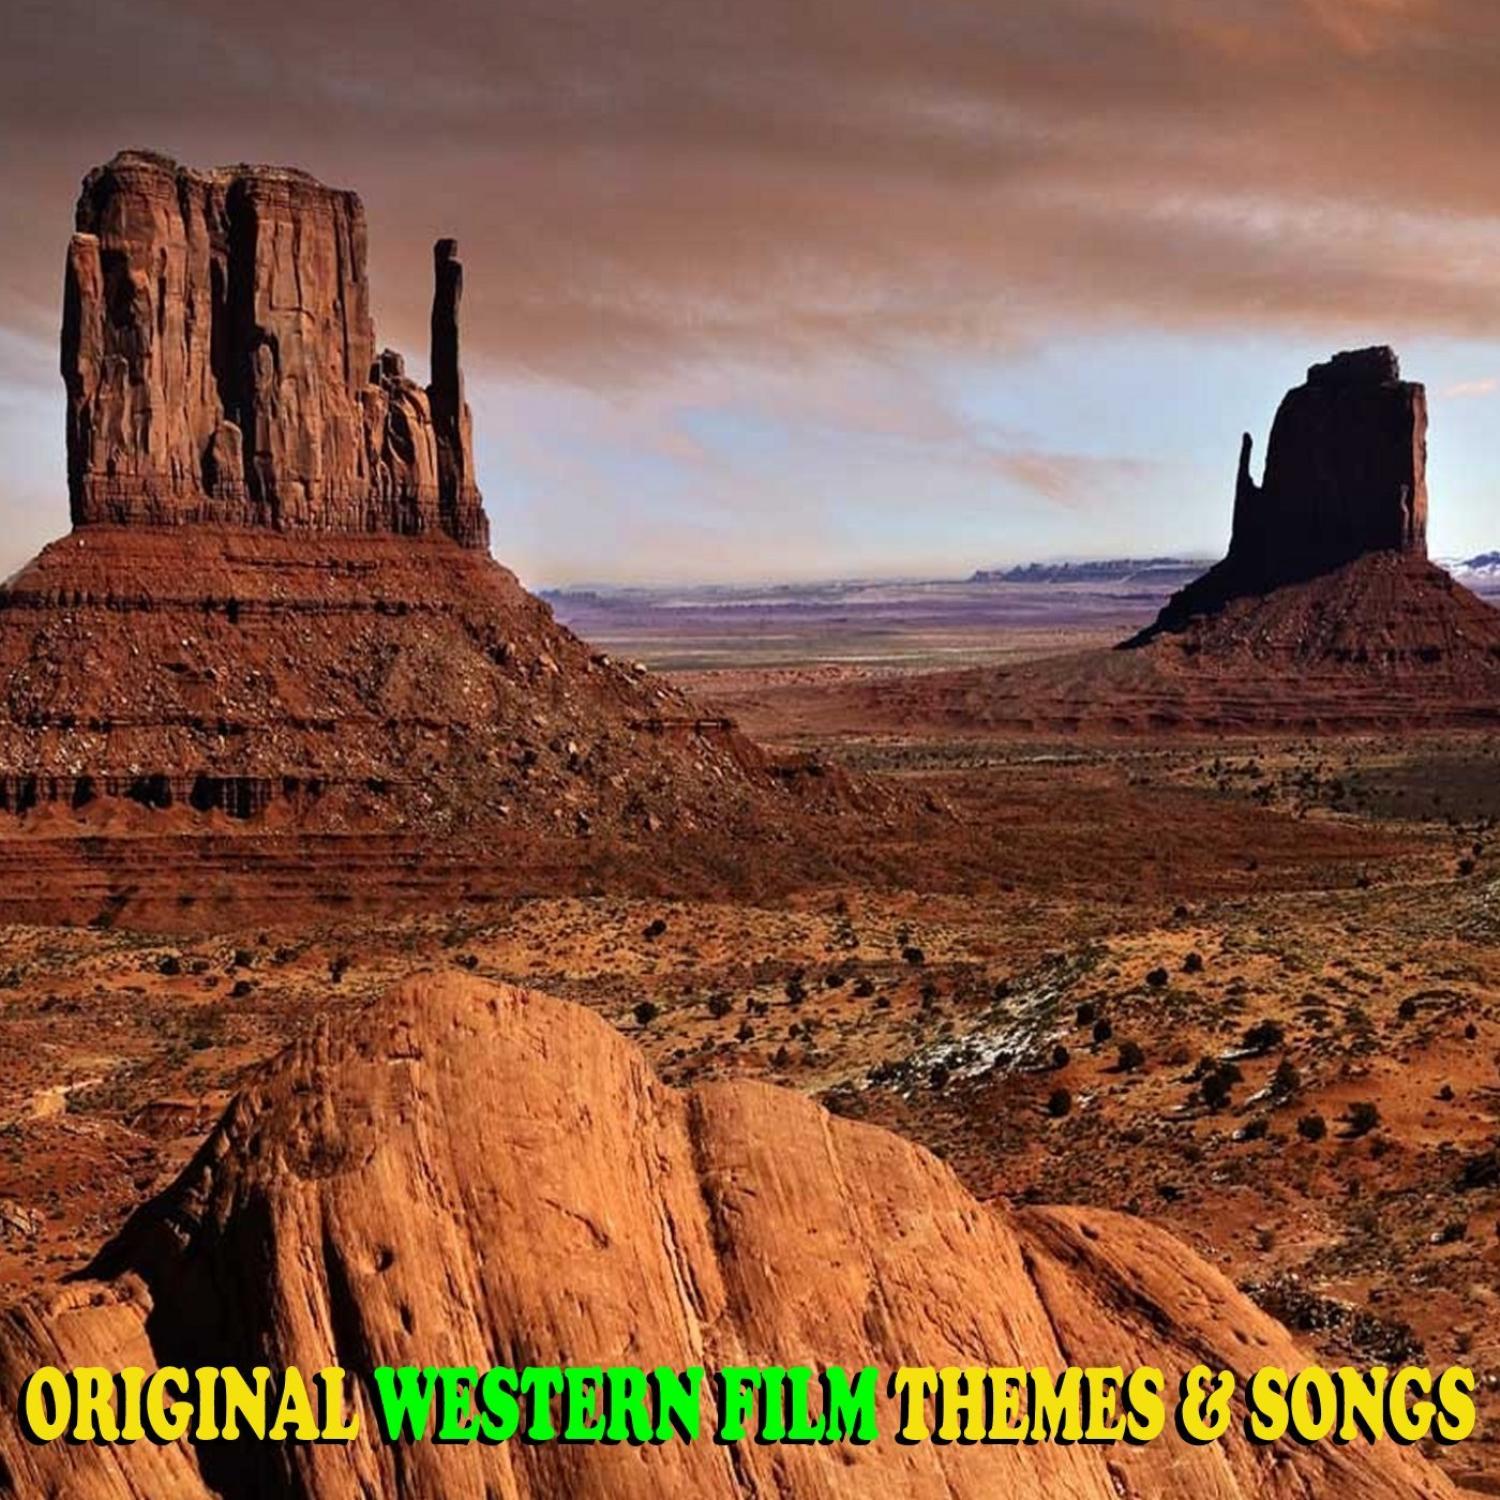 Original Western Film Themes & Songs